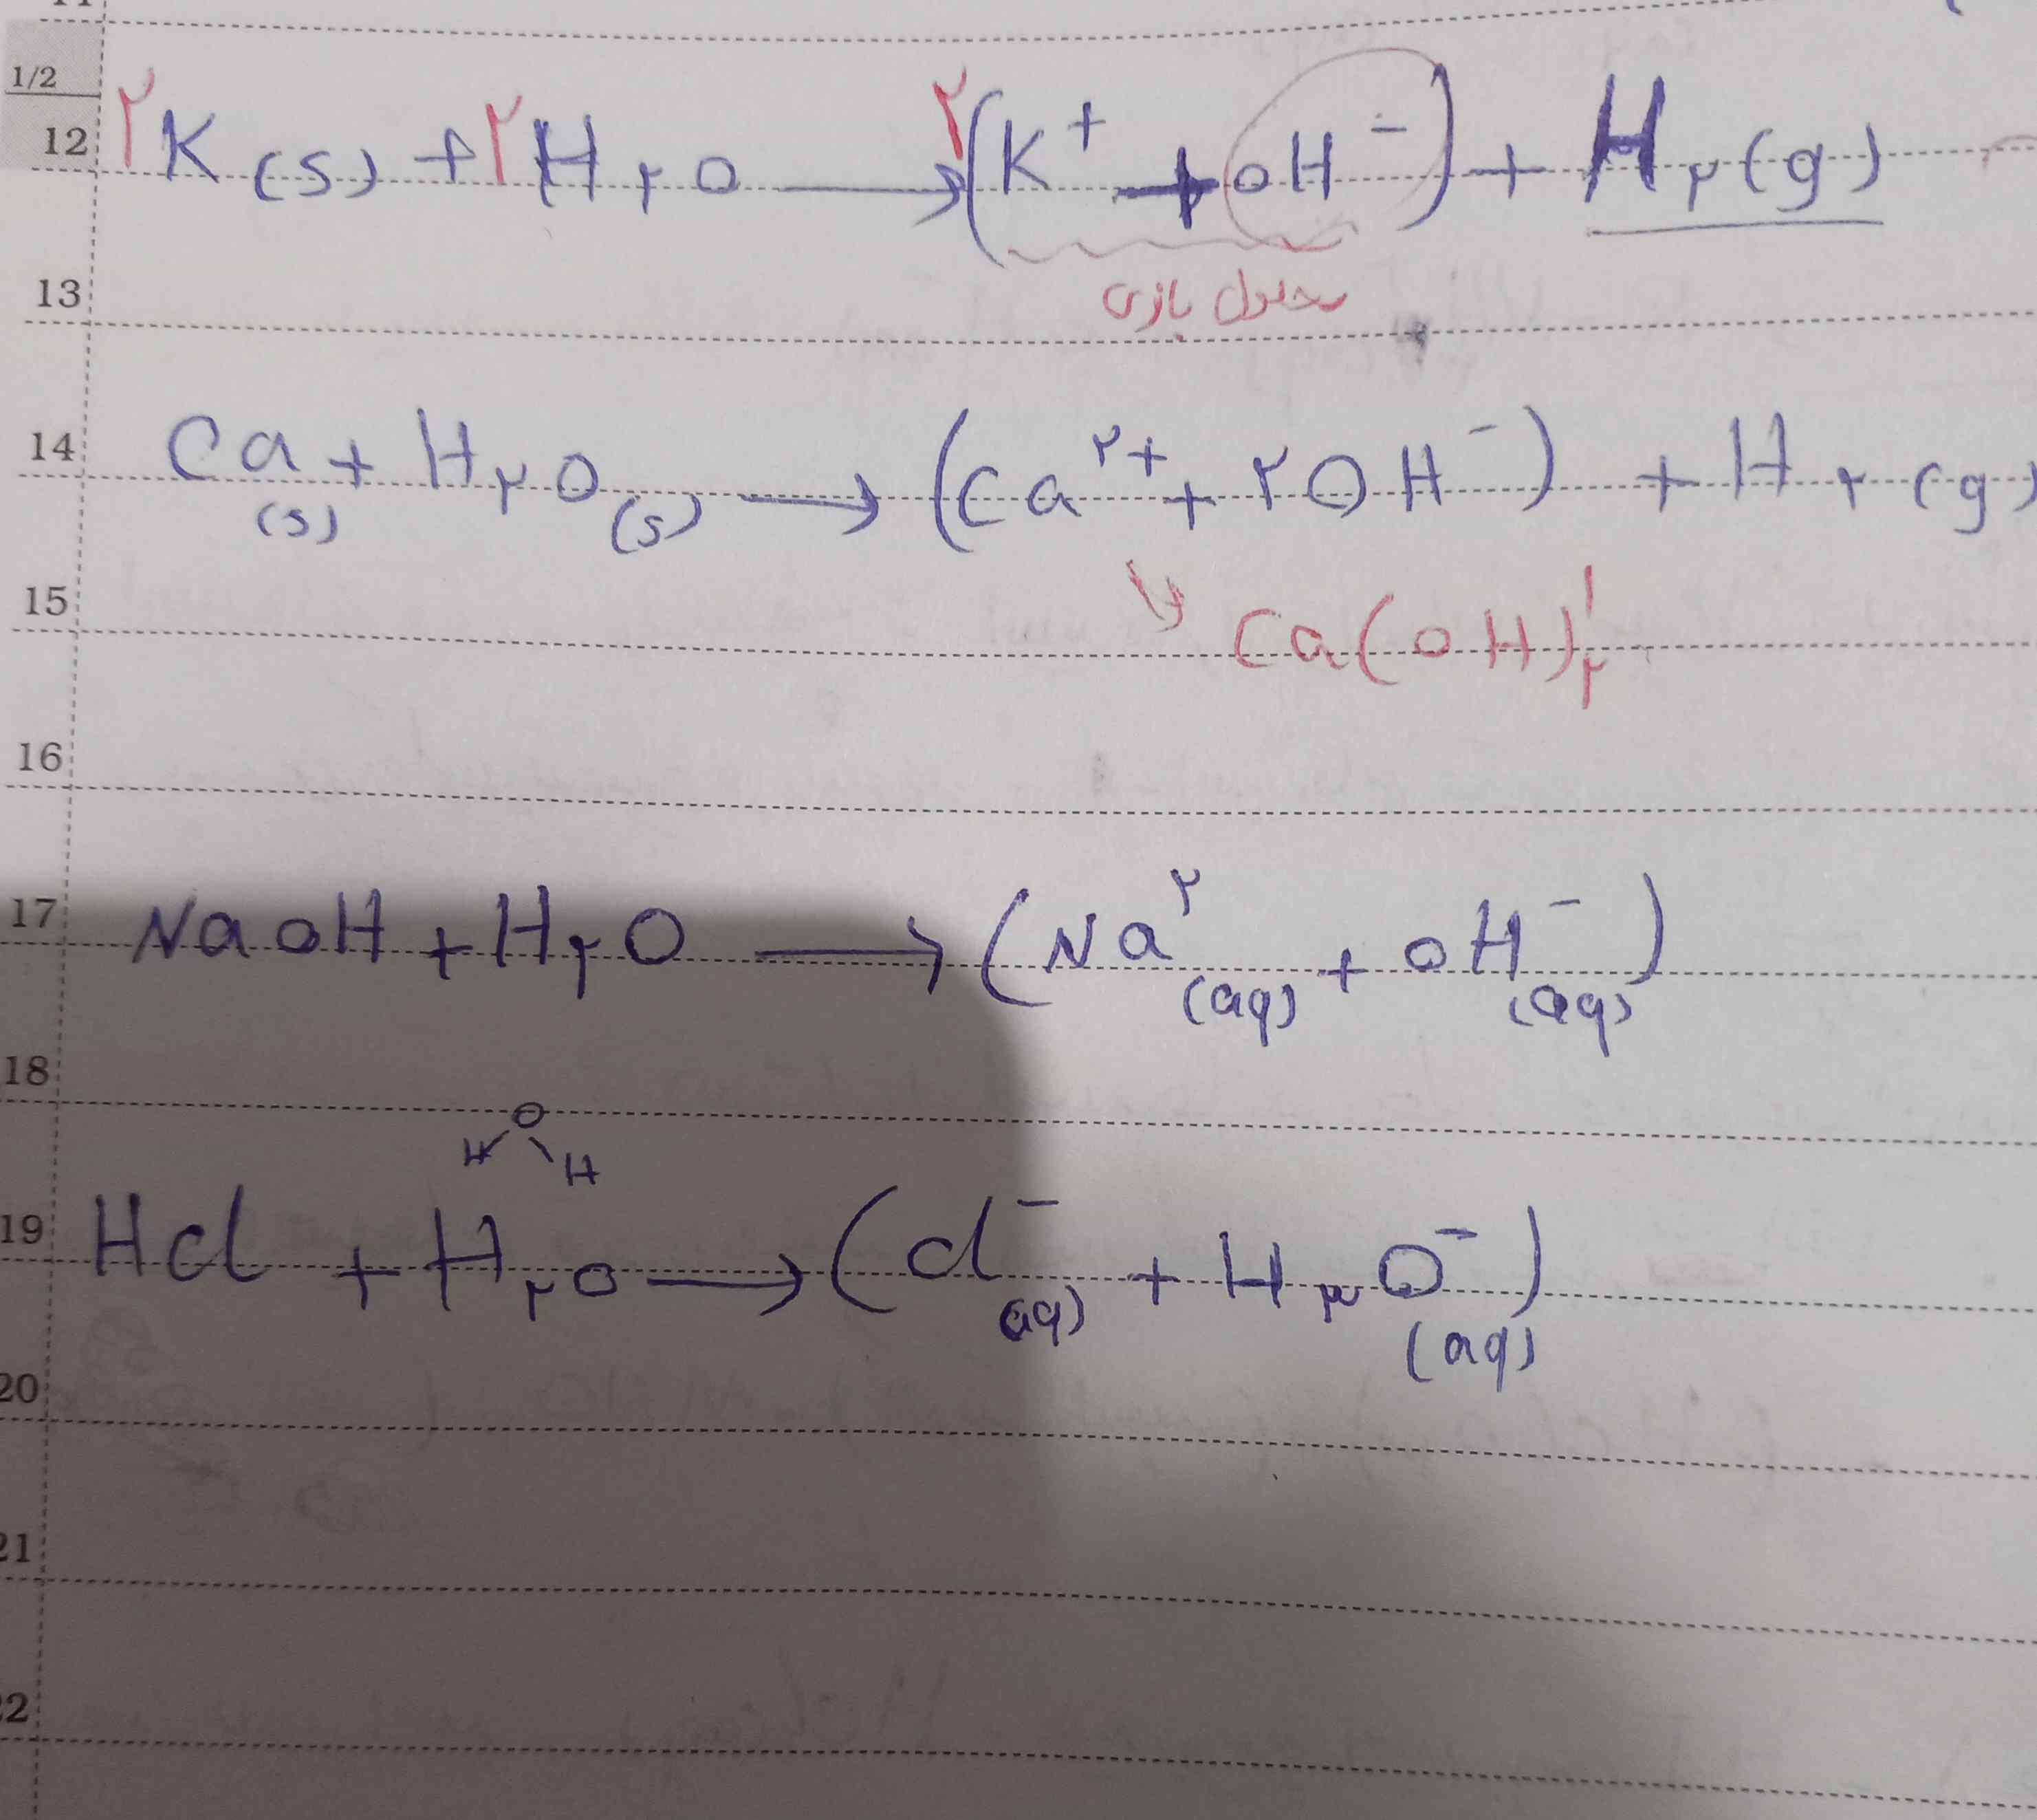 سلام دوستان میشه لطفا یکی اینجور معادله ها و واکنش‌پذیری هارو واسم یه توضیحی بده؟ 